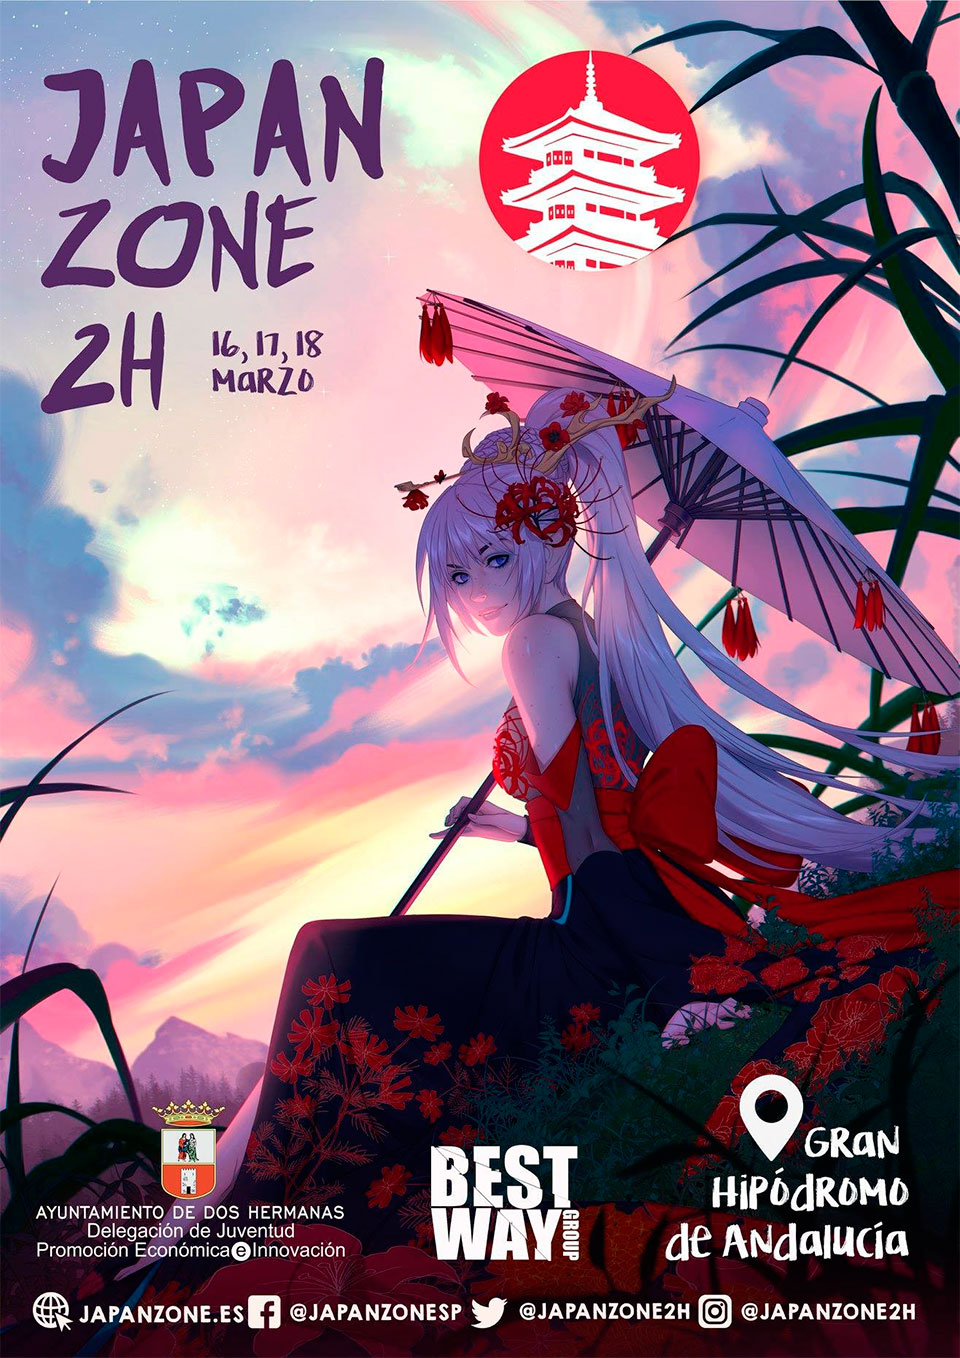 Japan Zone 2H 2018